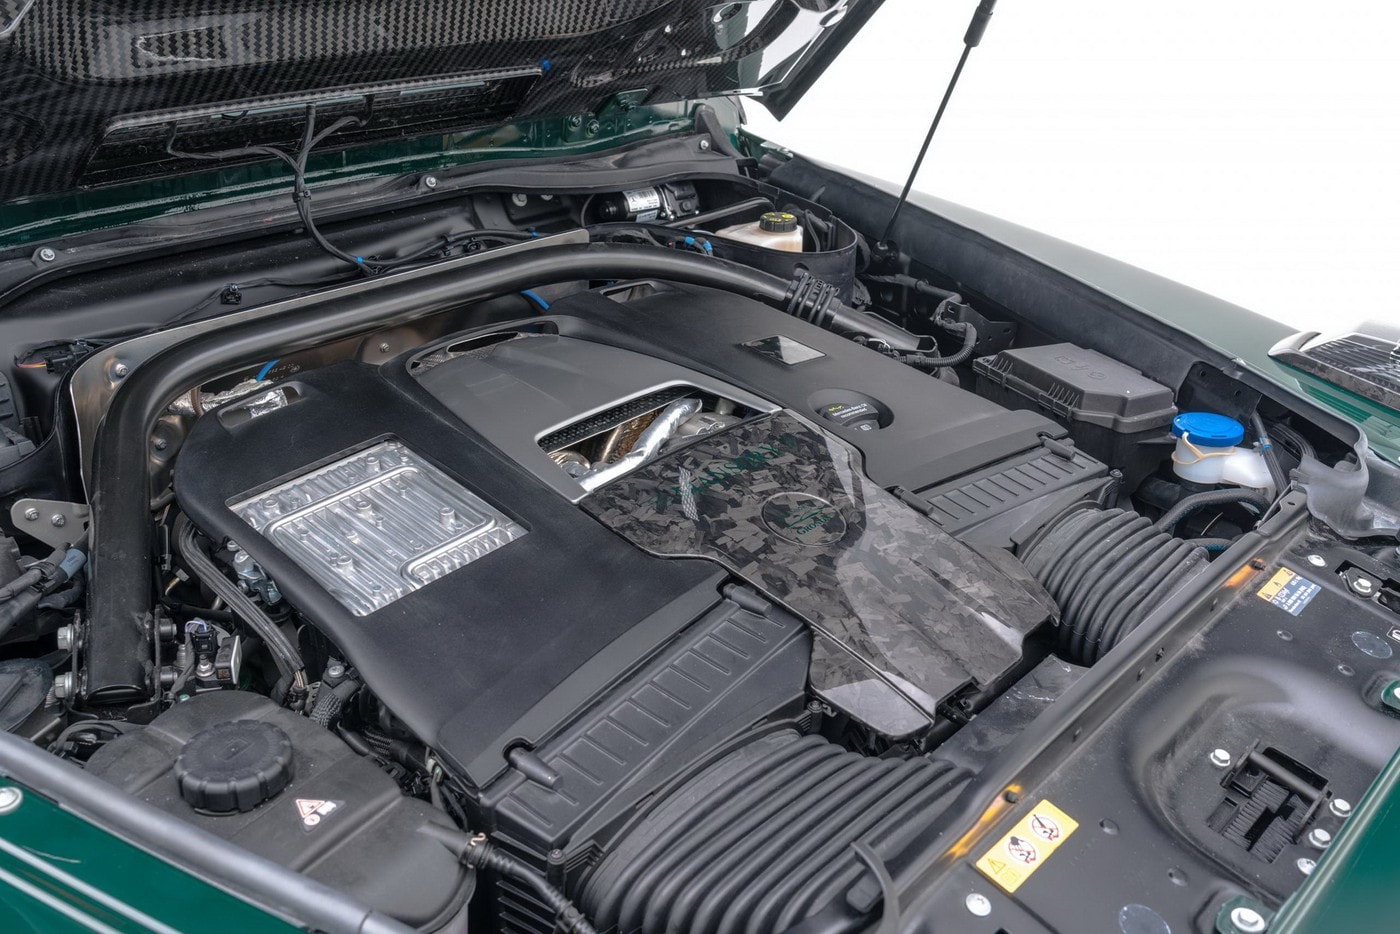 Mansory Mercedes-AMG G 63 G-Class "Gronos 2021" V8 BiTurbo 4x4 SUV Luxury Tuned Truck Wagon 4WD Power Speed Performance Wide Body Kit Custom Rims